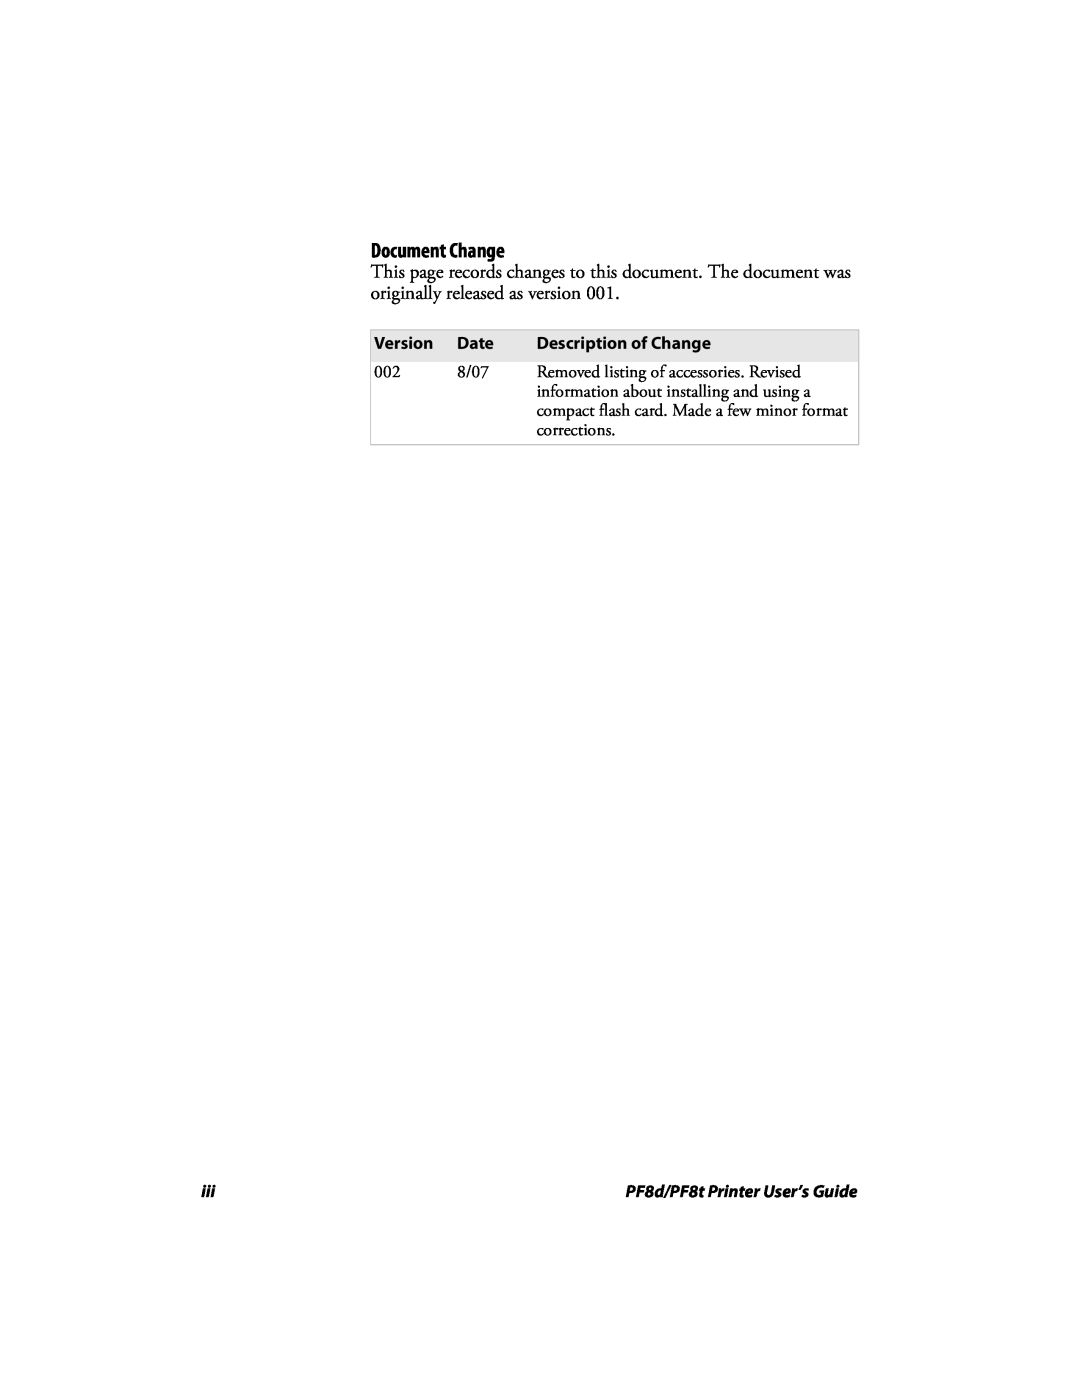 Intermec PF8T, PF8D manual Document Change, Version Date, Description of Change, PF8d/PF8t Printer User’s Guide 